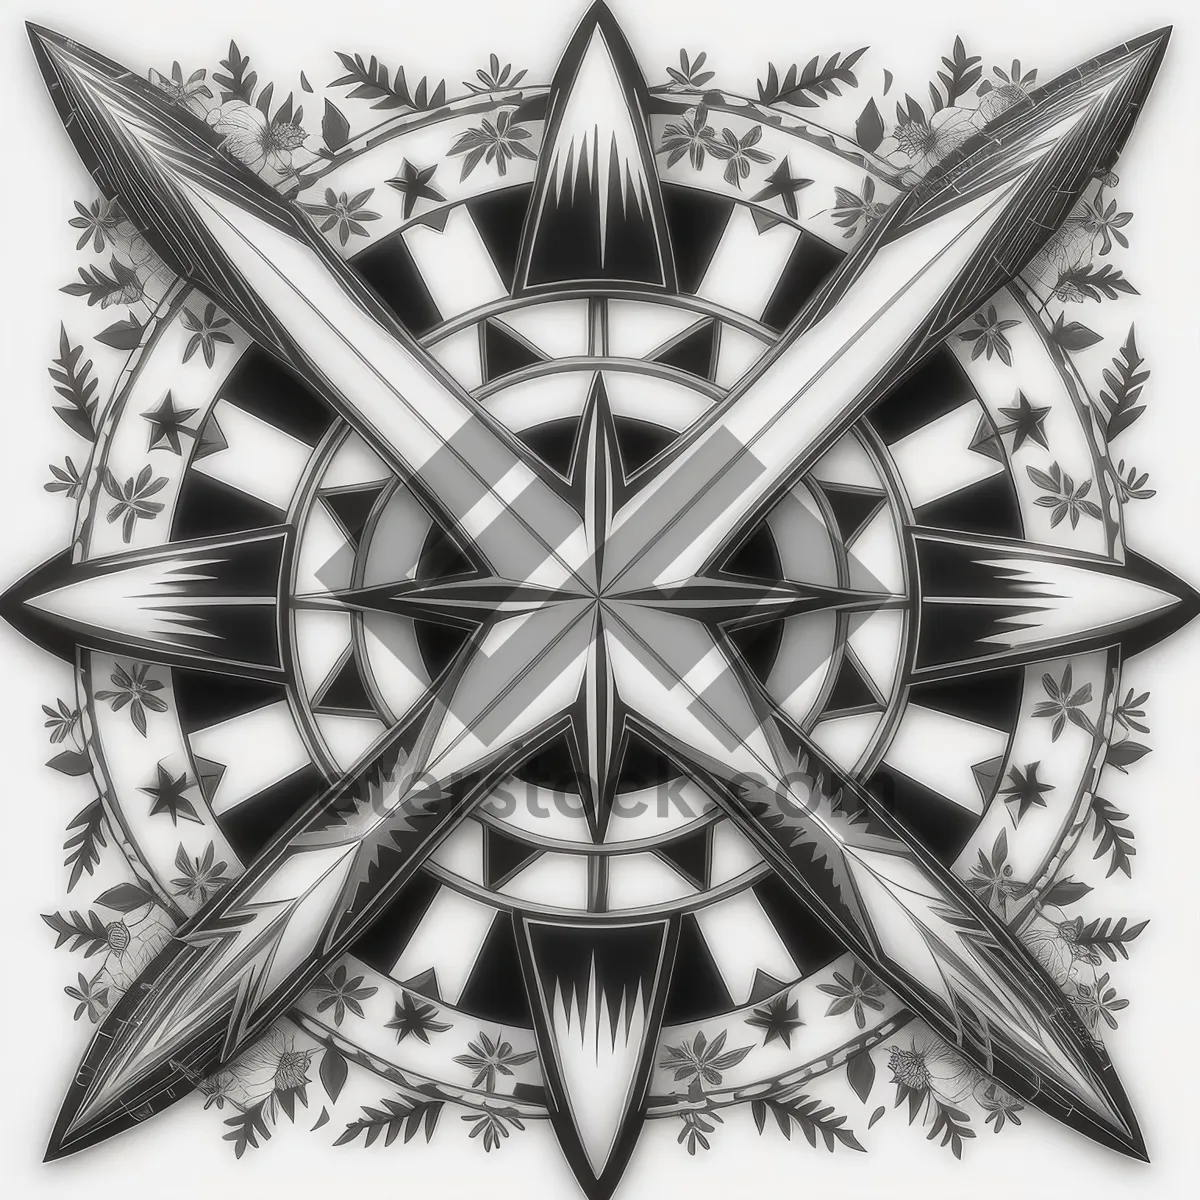 Picture of Decorative Heraldic Star Symbol in Intricate Tracery Design